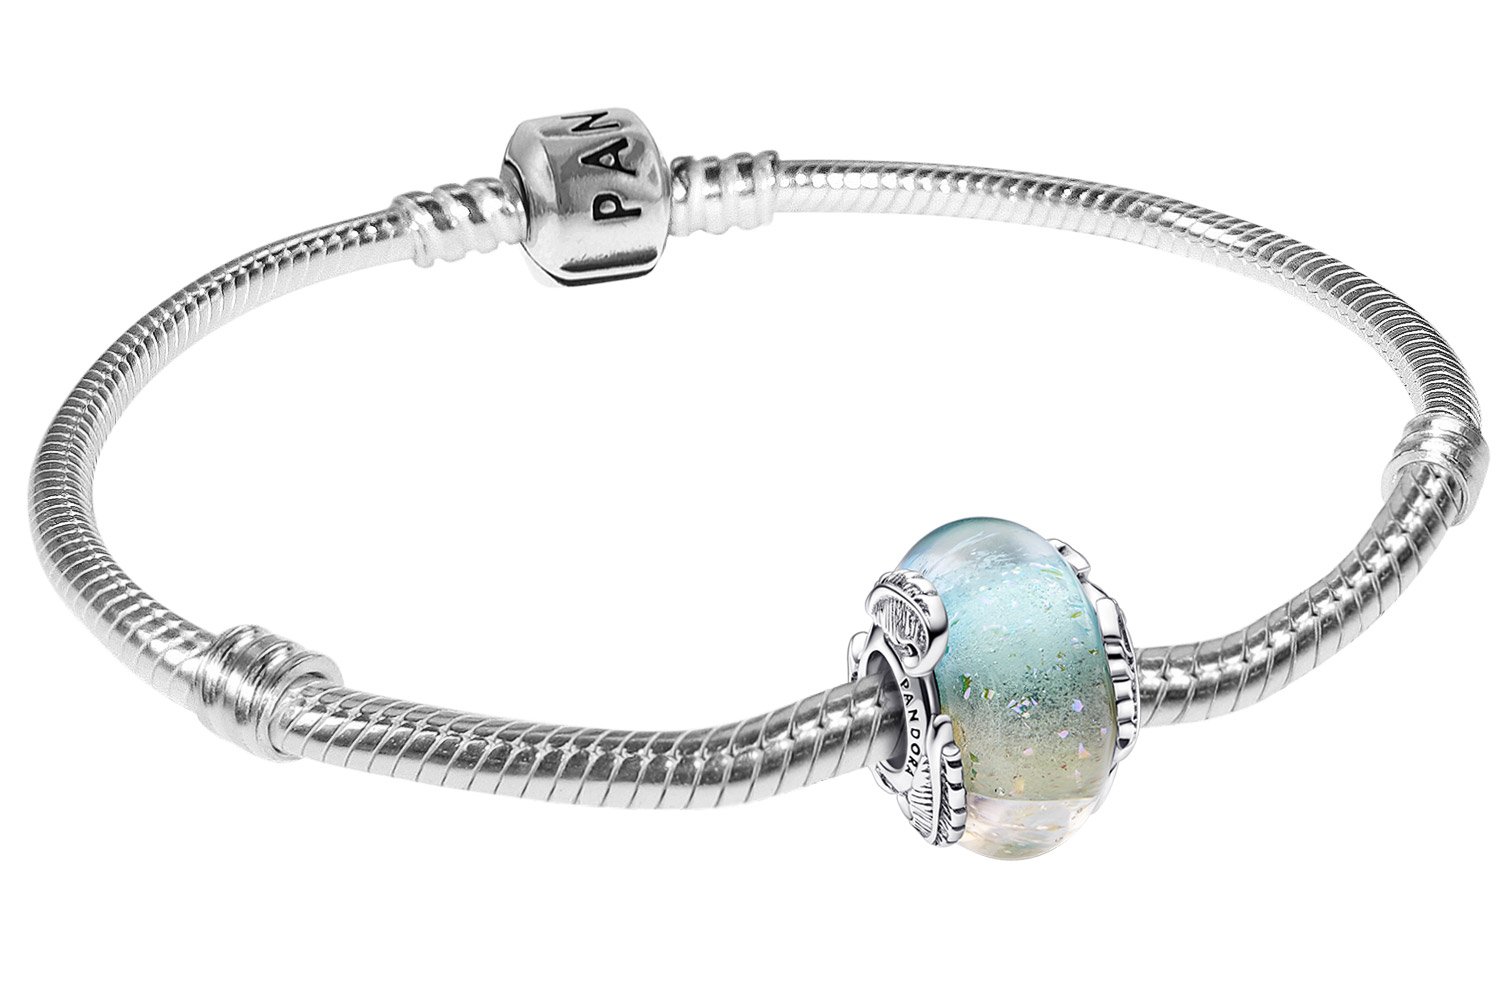 Lavencious Multi Color Murano Glass Bead Stretch Bracelet – LAVENCIOUS